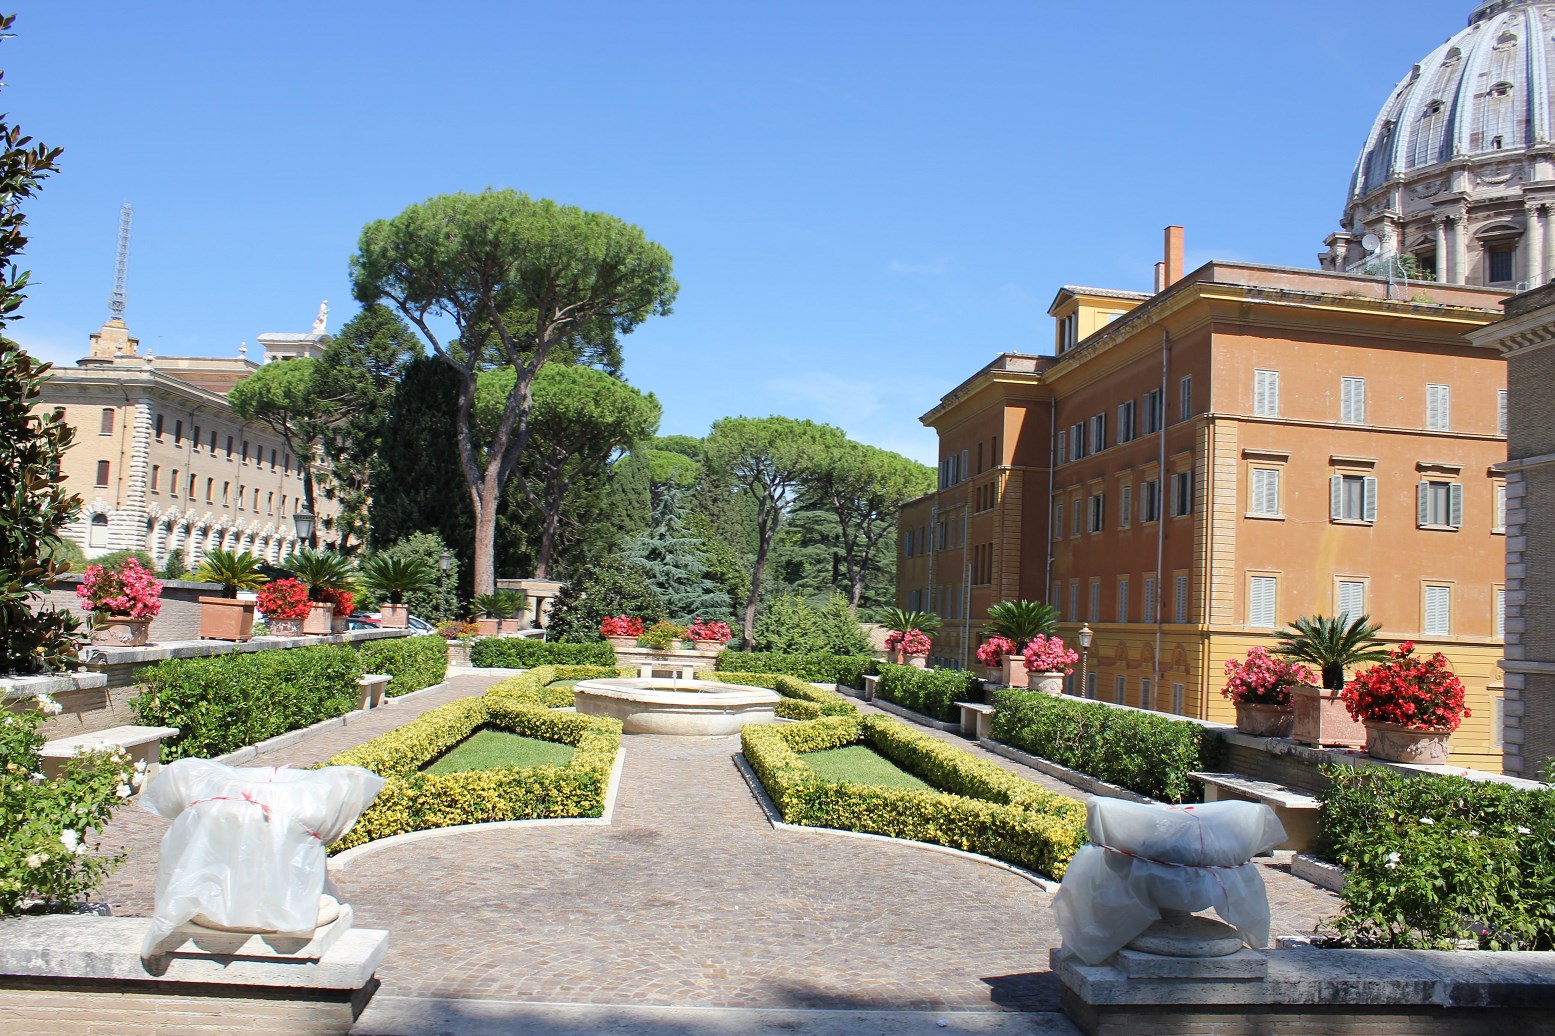 vatican gardens tour